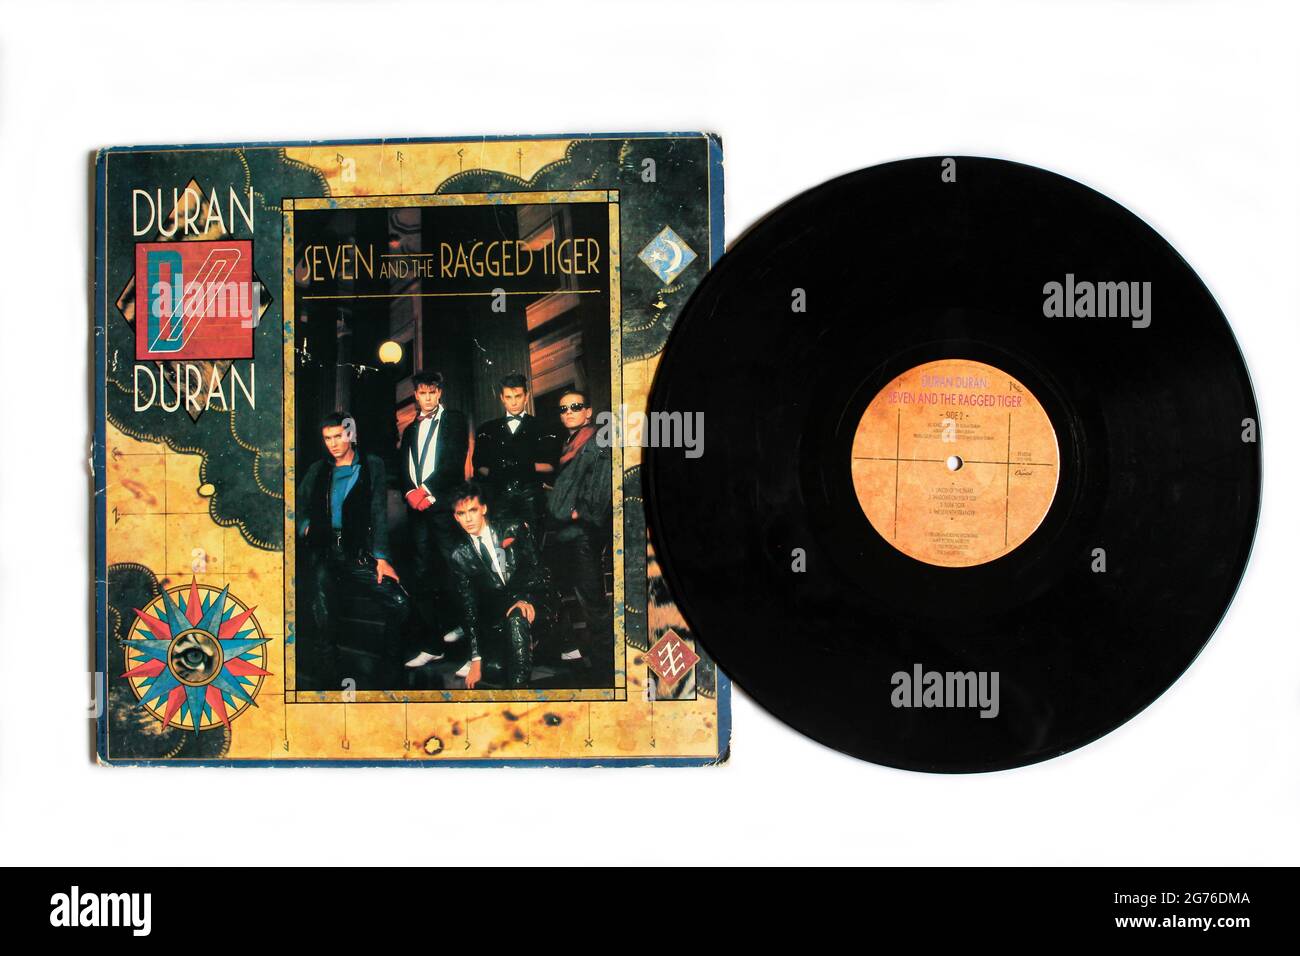 Englische New Wave Rock Band, Duran Duran Musikalbum auf Vinyl LP Disc. Titel: Seven and the Ragged Tiger Album Cover Stockfoto